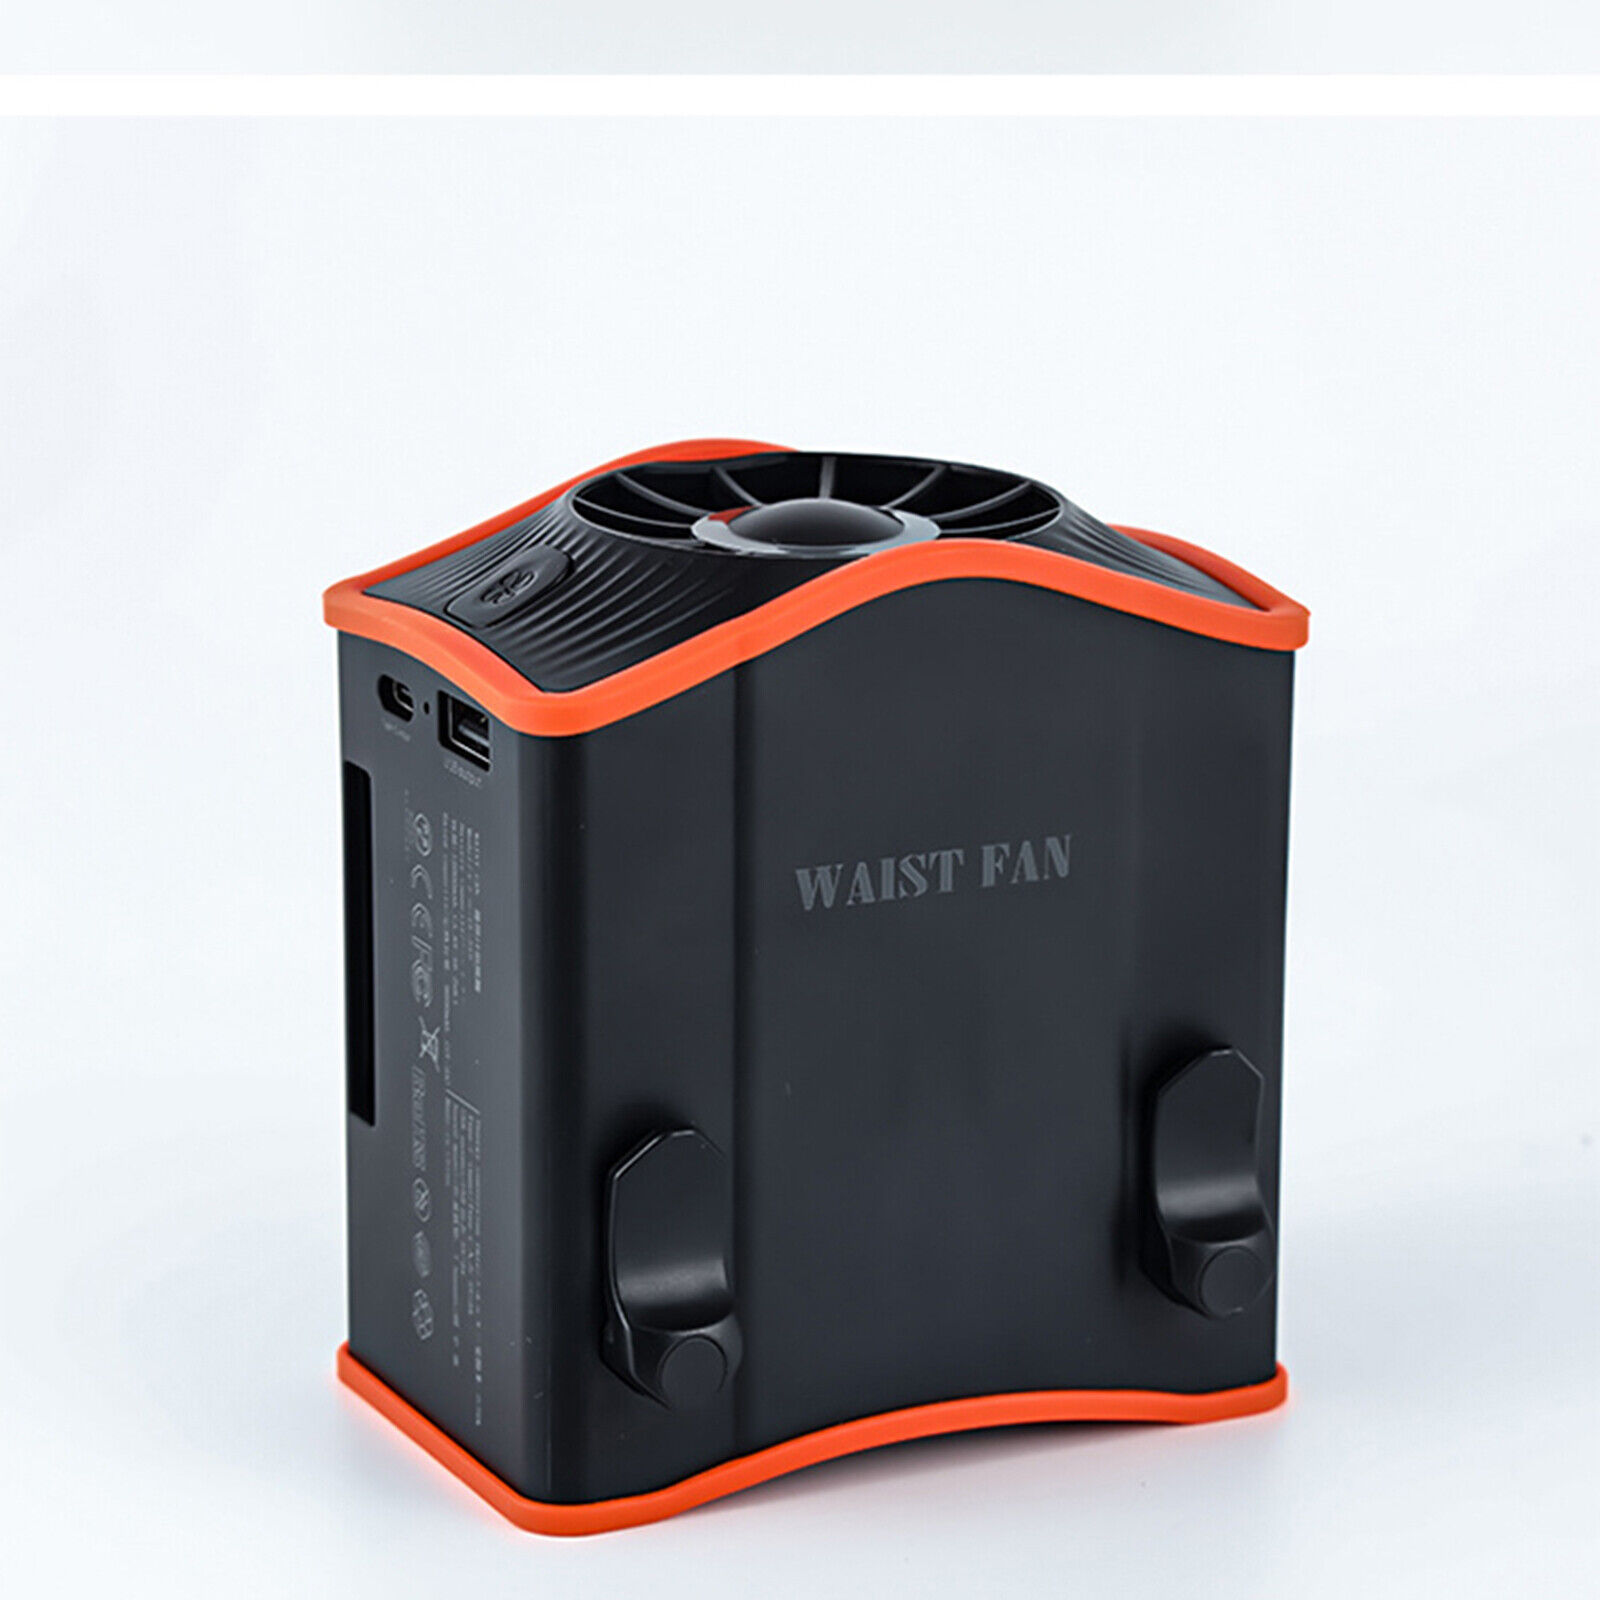 2-in-1 USB Port Rechargeable Cooling Fan Waist-mounted Portable Outdoor Fan ##